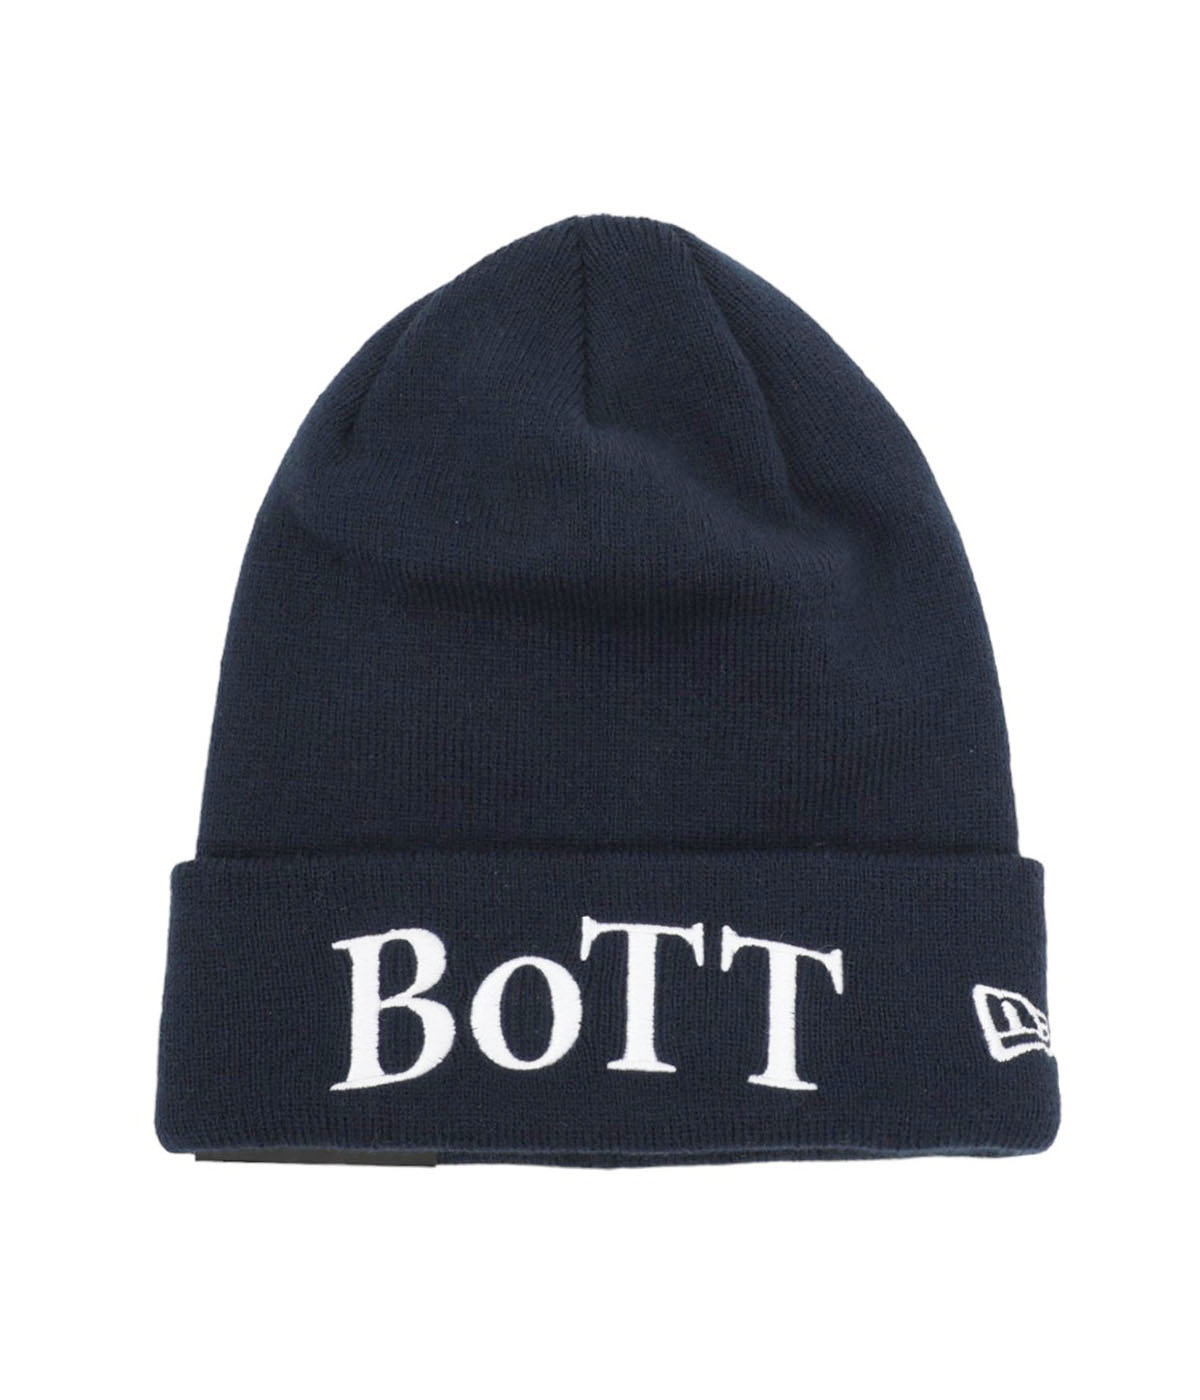 BoTT NEW ERA ボット ニューエラ ビーニー ニット帽 帽子 - ニット 